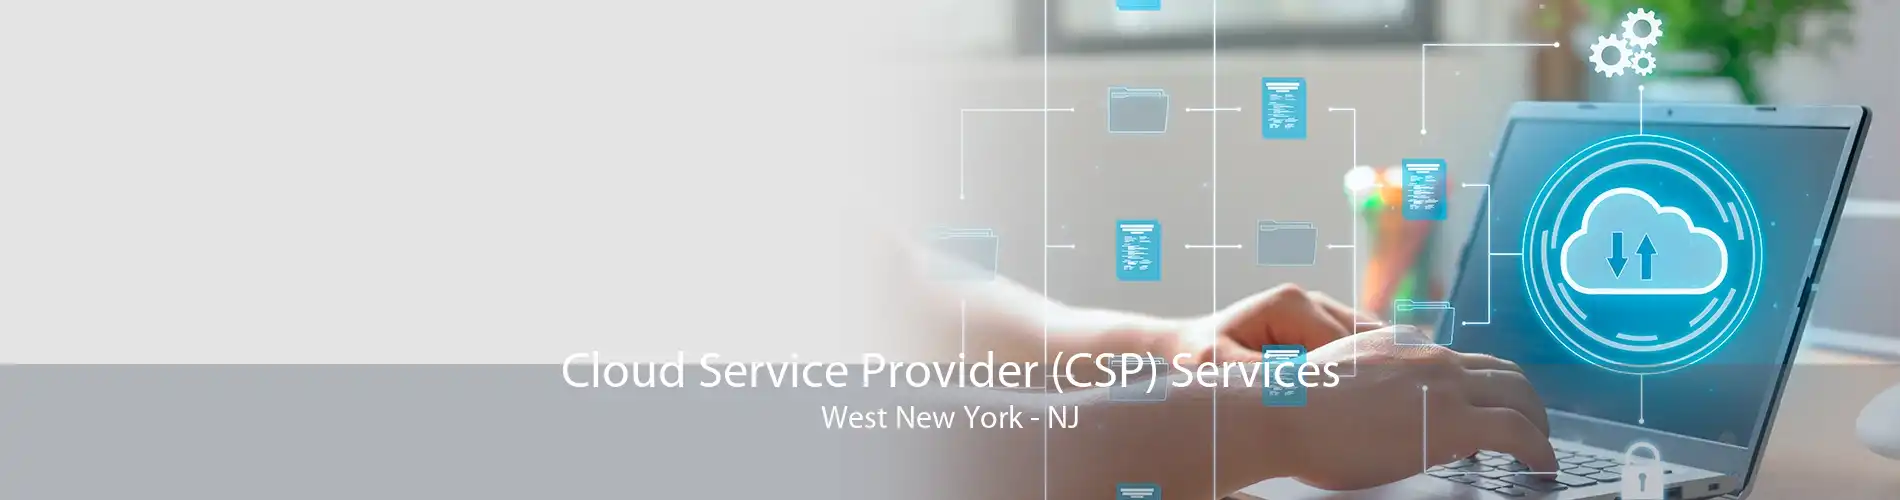 Cloud Service Provider (CSP) Services West New York - NJ